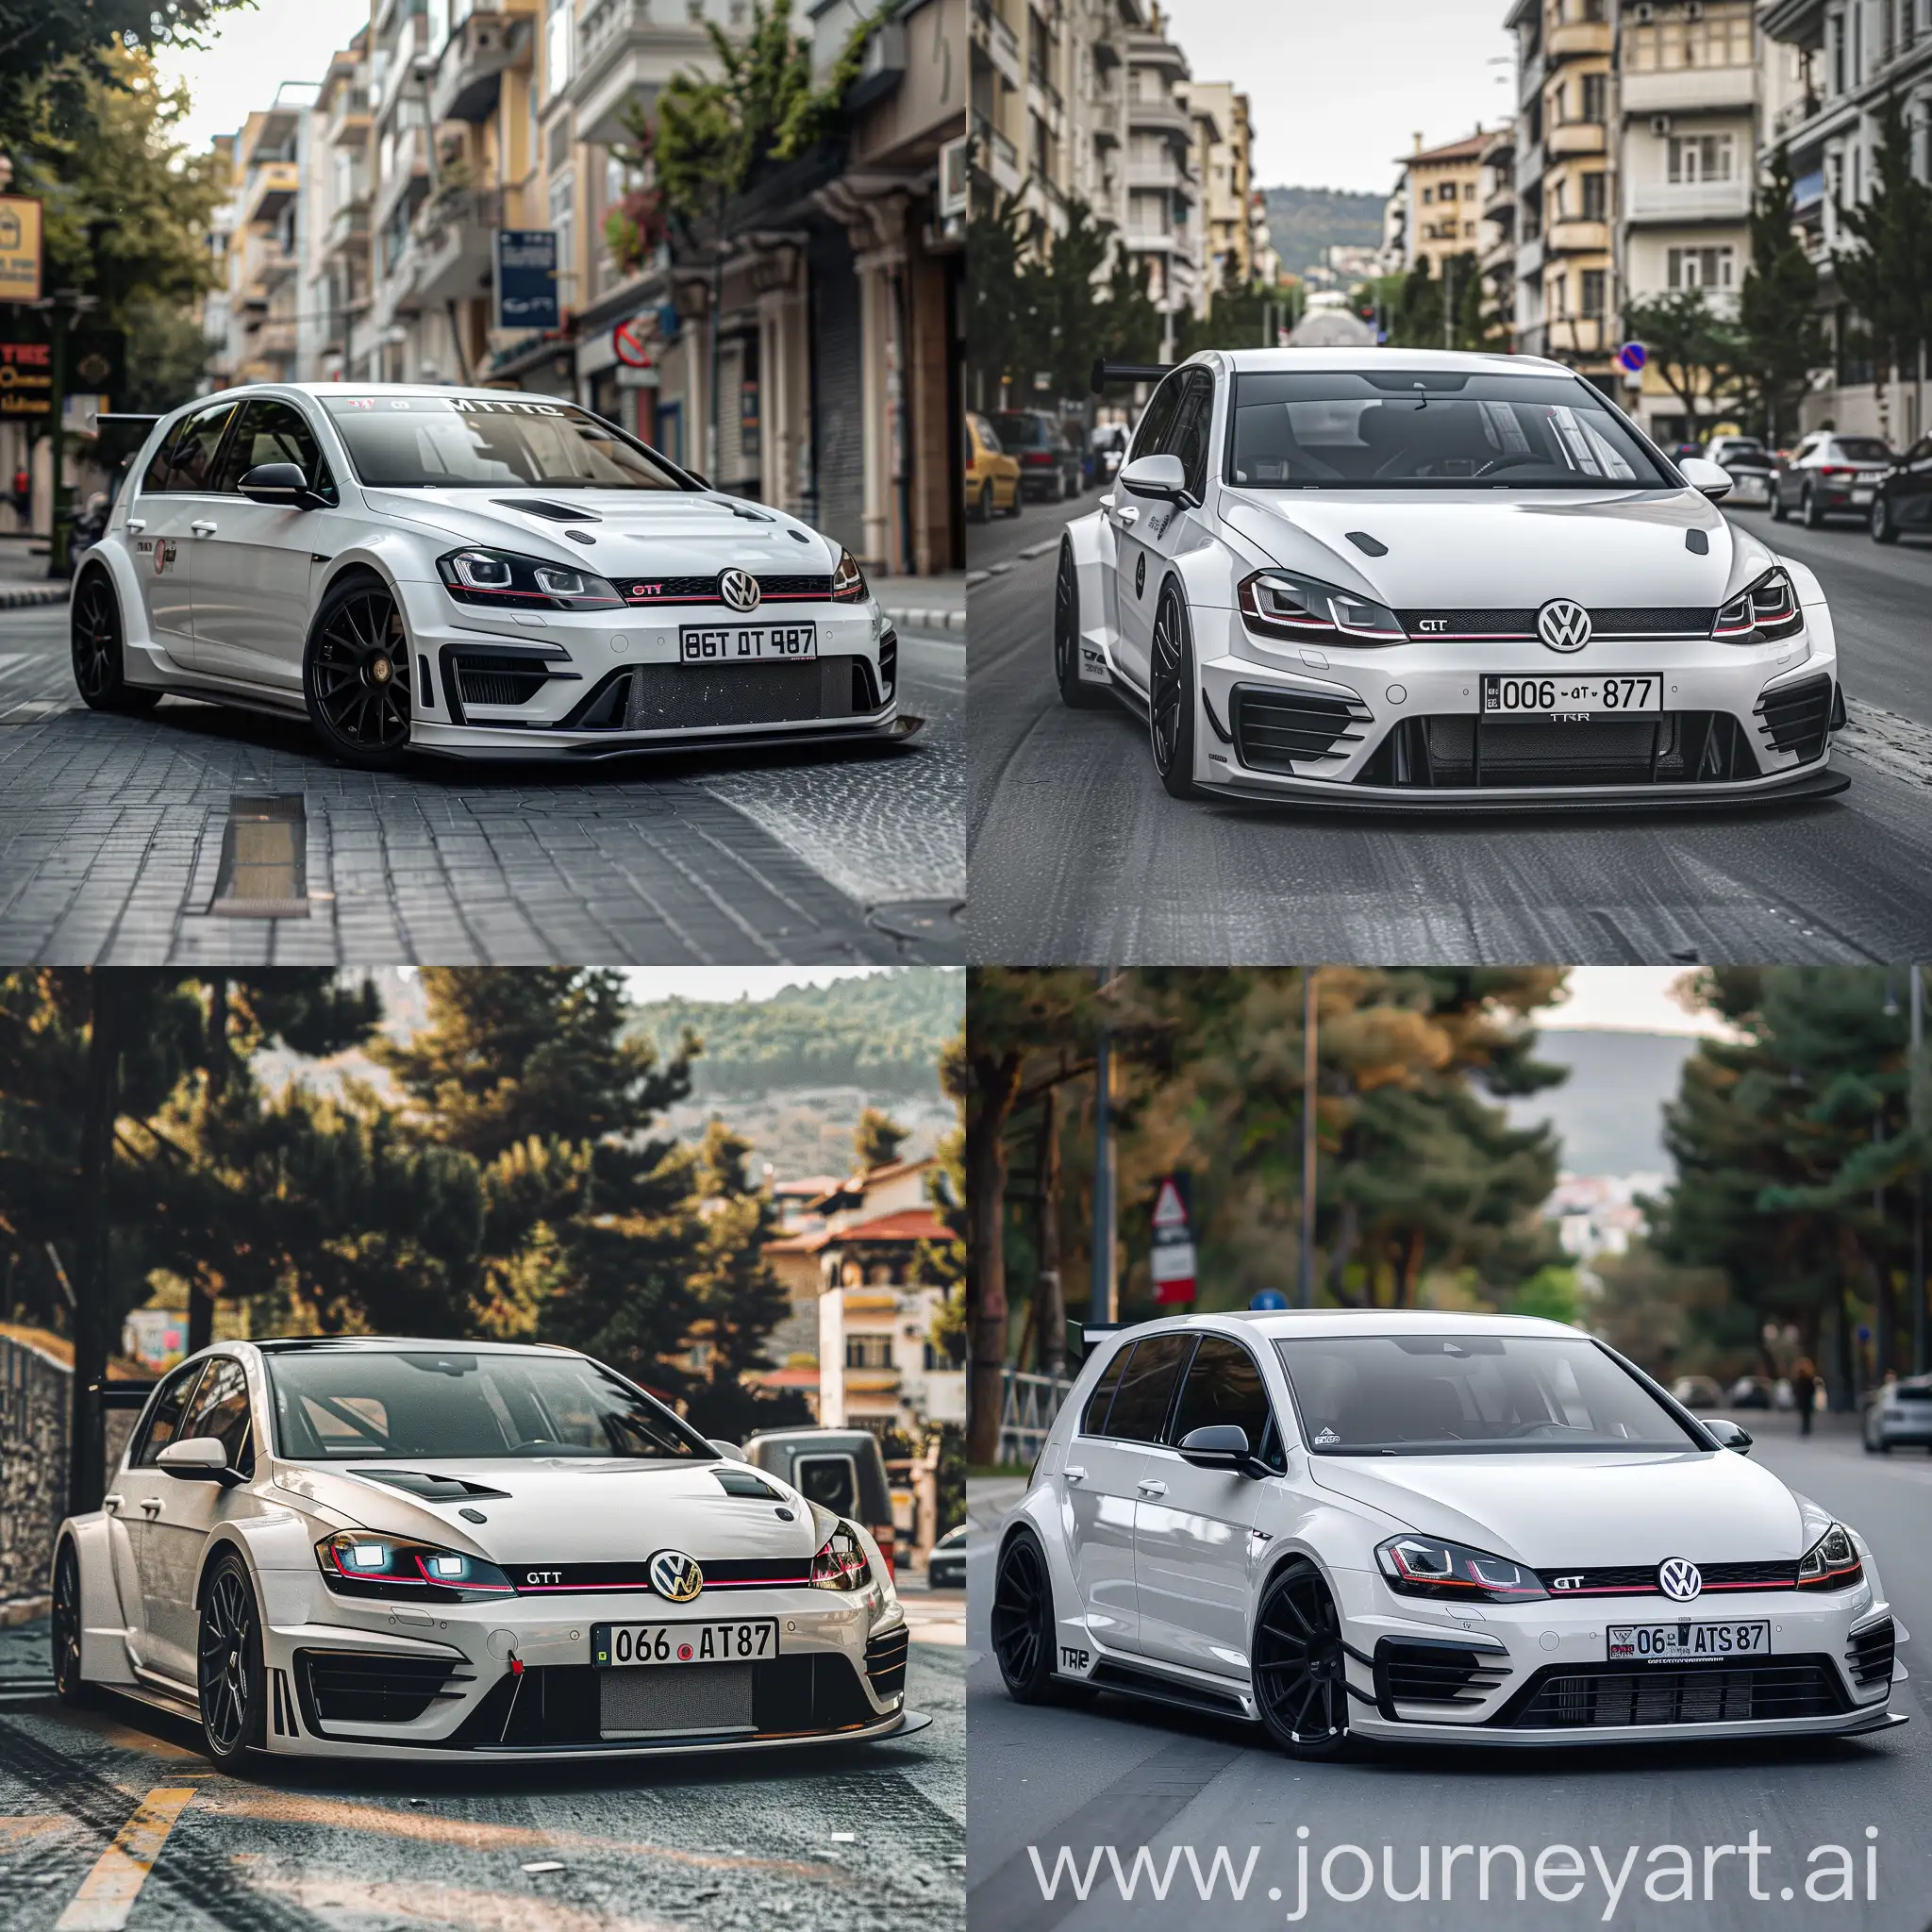 Realistic 8k detailed photo op Snapchat story filter Volkswagen Golf mk7.5 2018 gti TCR spotted in wit met zwarte velgen met Kenteken turkse*06-ats-877 in Ankara mooi tune TCR